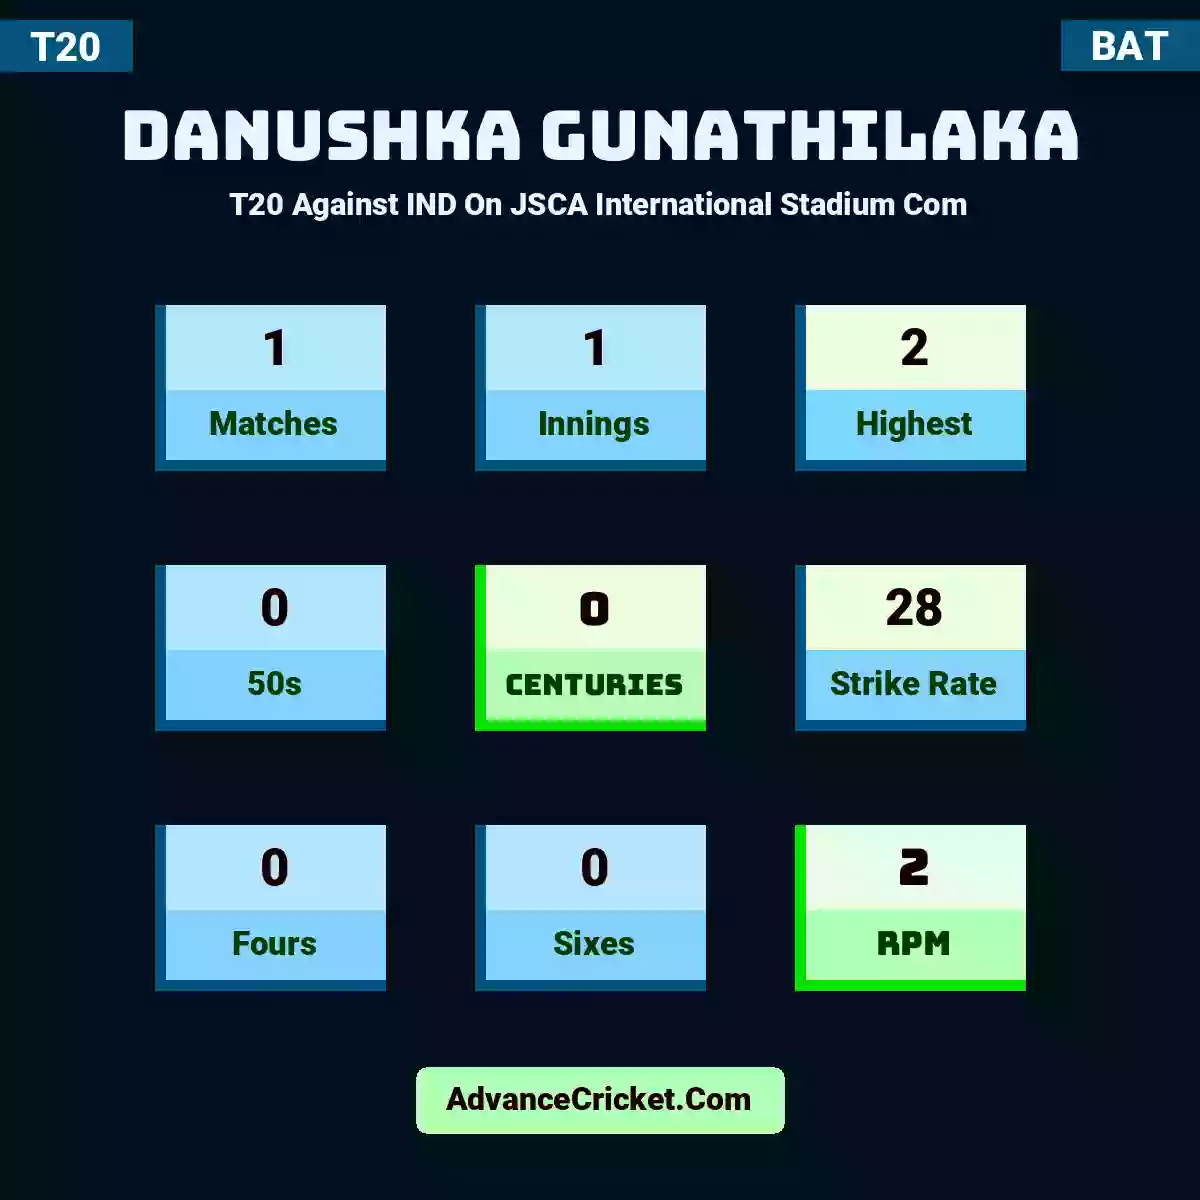 Danushka Gunathilaka T20  Against IND On JSCA International Stadium Com, Danushka Gunathilaka played 1 matches, scored 2 runs as highest, 0 half-centuries, and 0 centuries, with a strike rate of 28. D.Gunathilaka hit 0 fours and 0 sixes, with an RPM of 2.